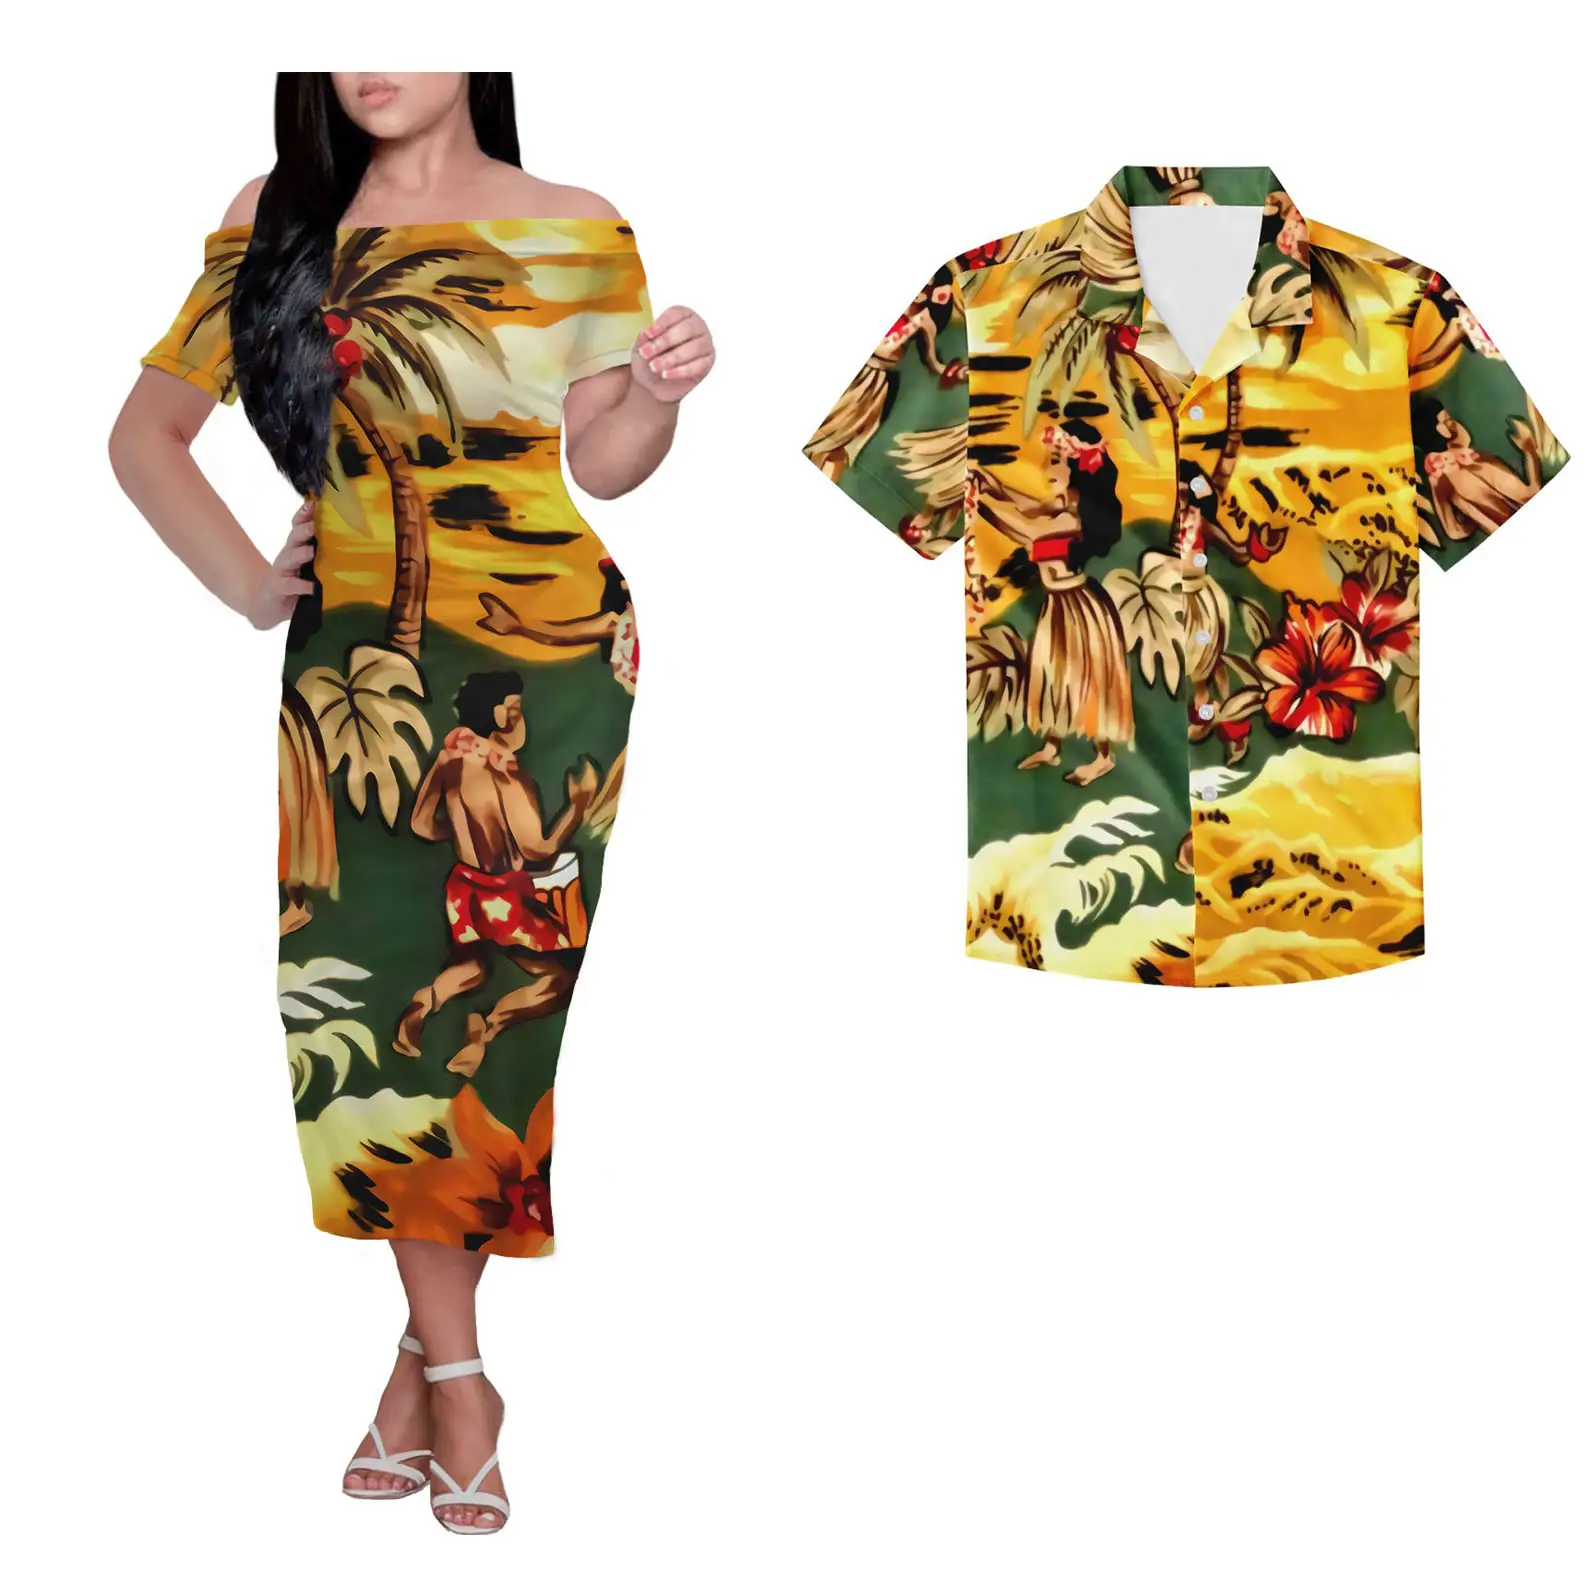 3D Hawaiian Polynesian tribal elements primitive forest fabric vintage pattern design couple suit women feature printed dress me